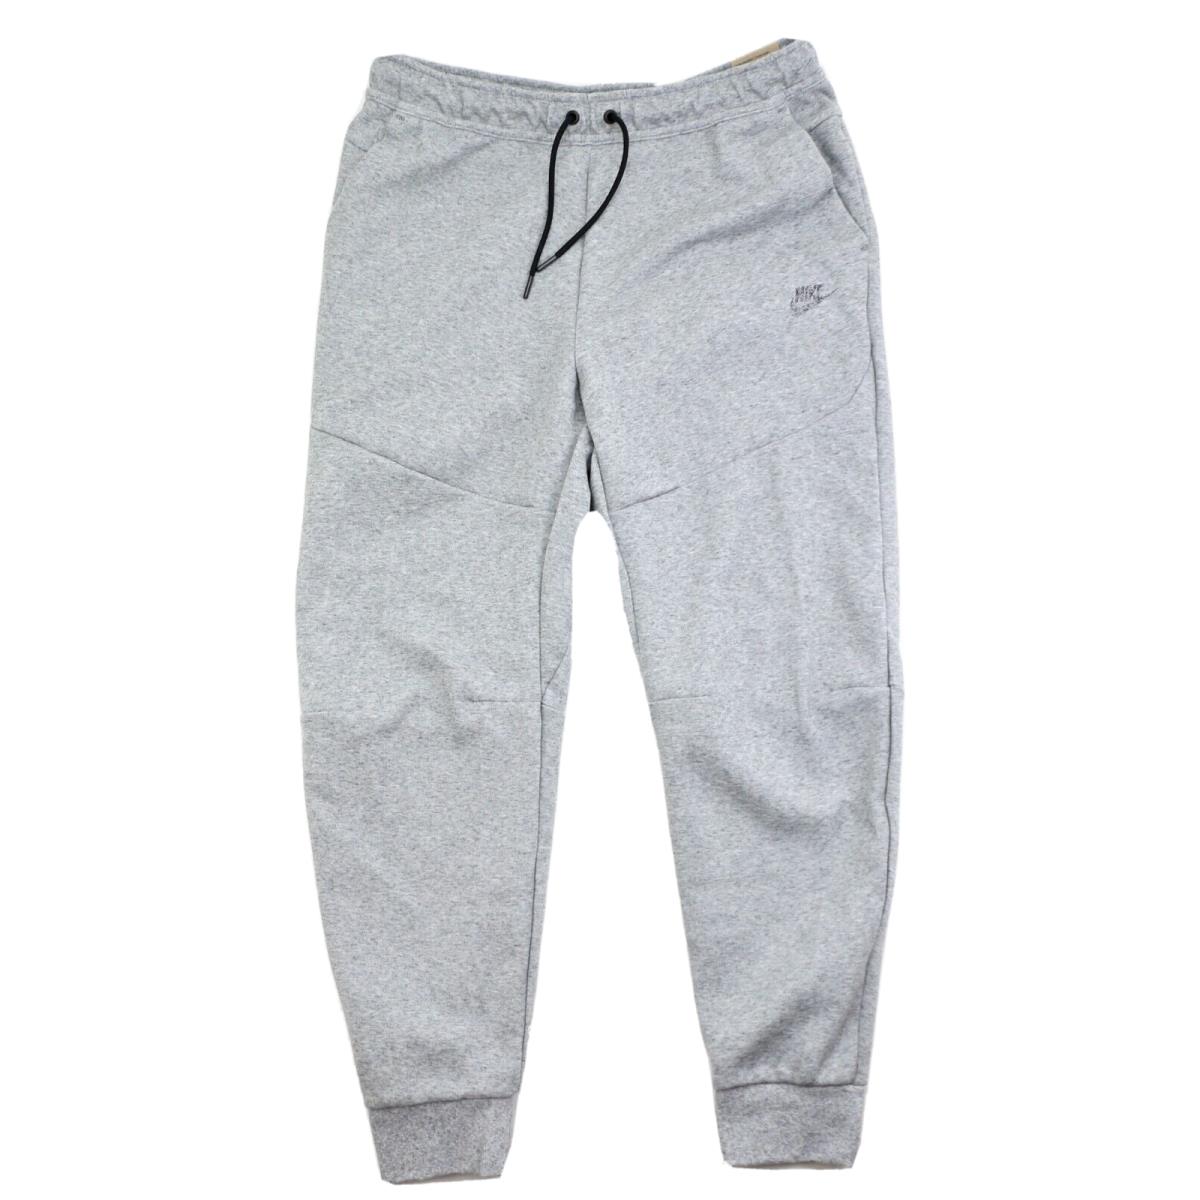 Nike clothing  - Gray 11